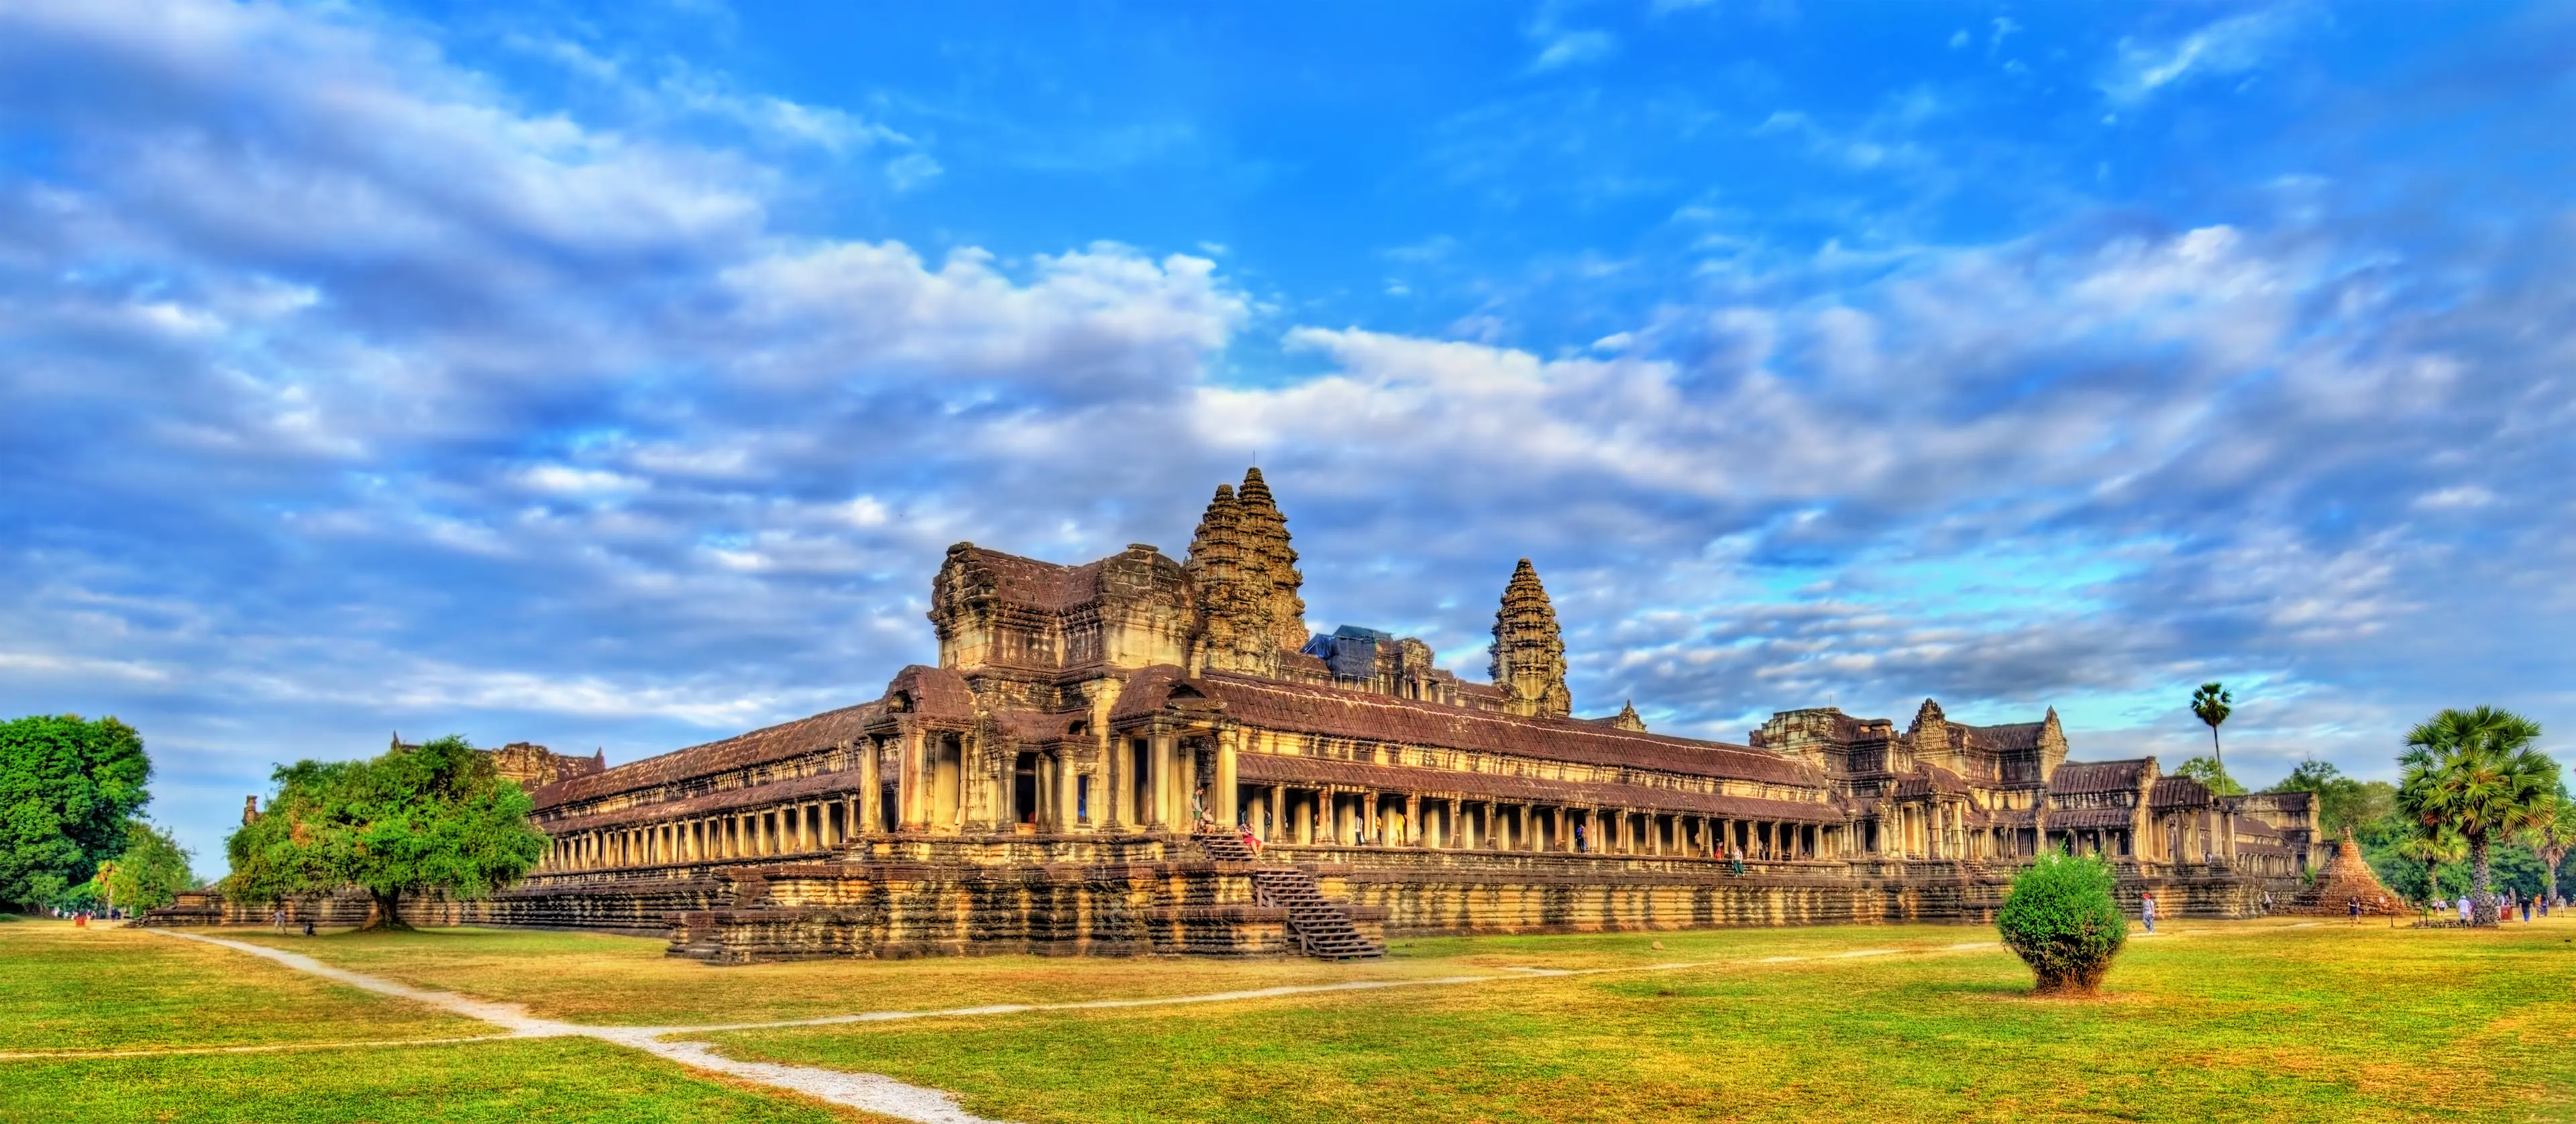 Angkor Thom complex